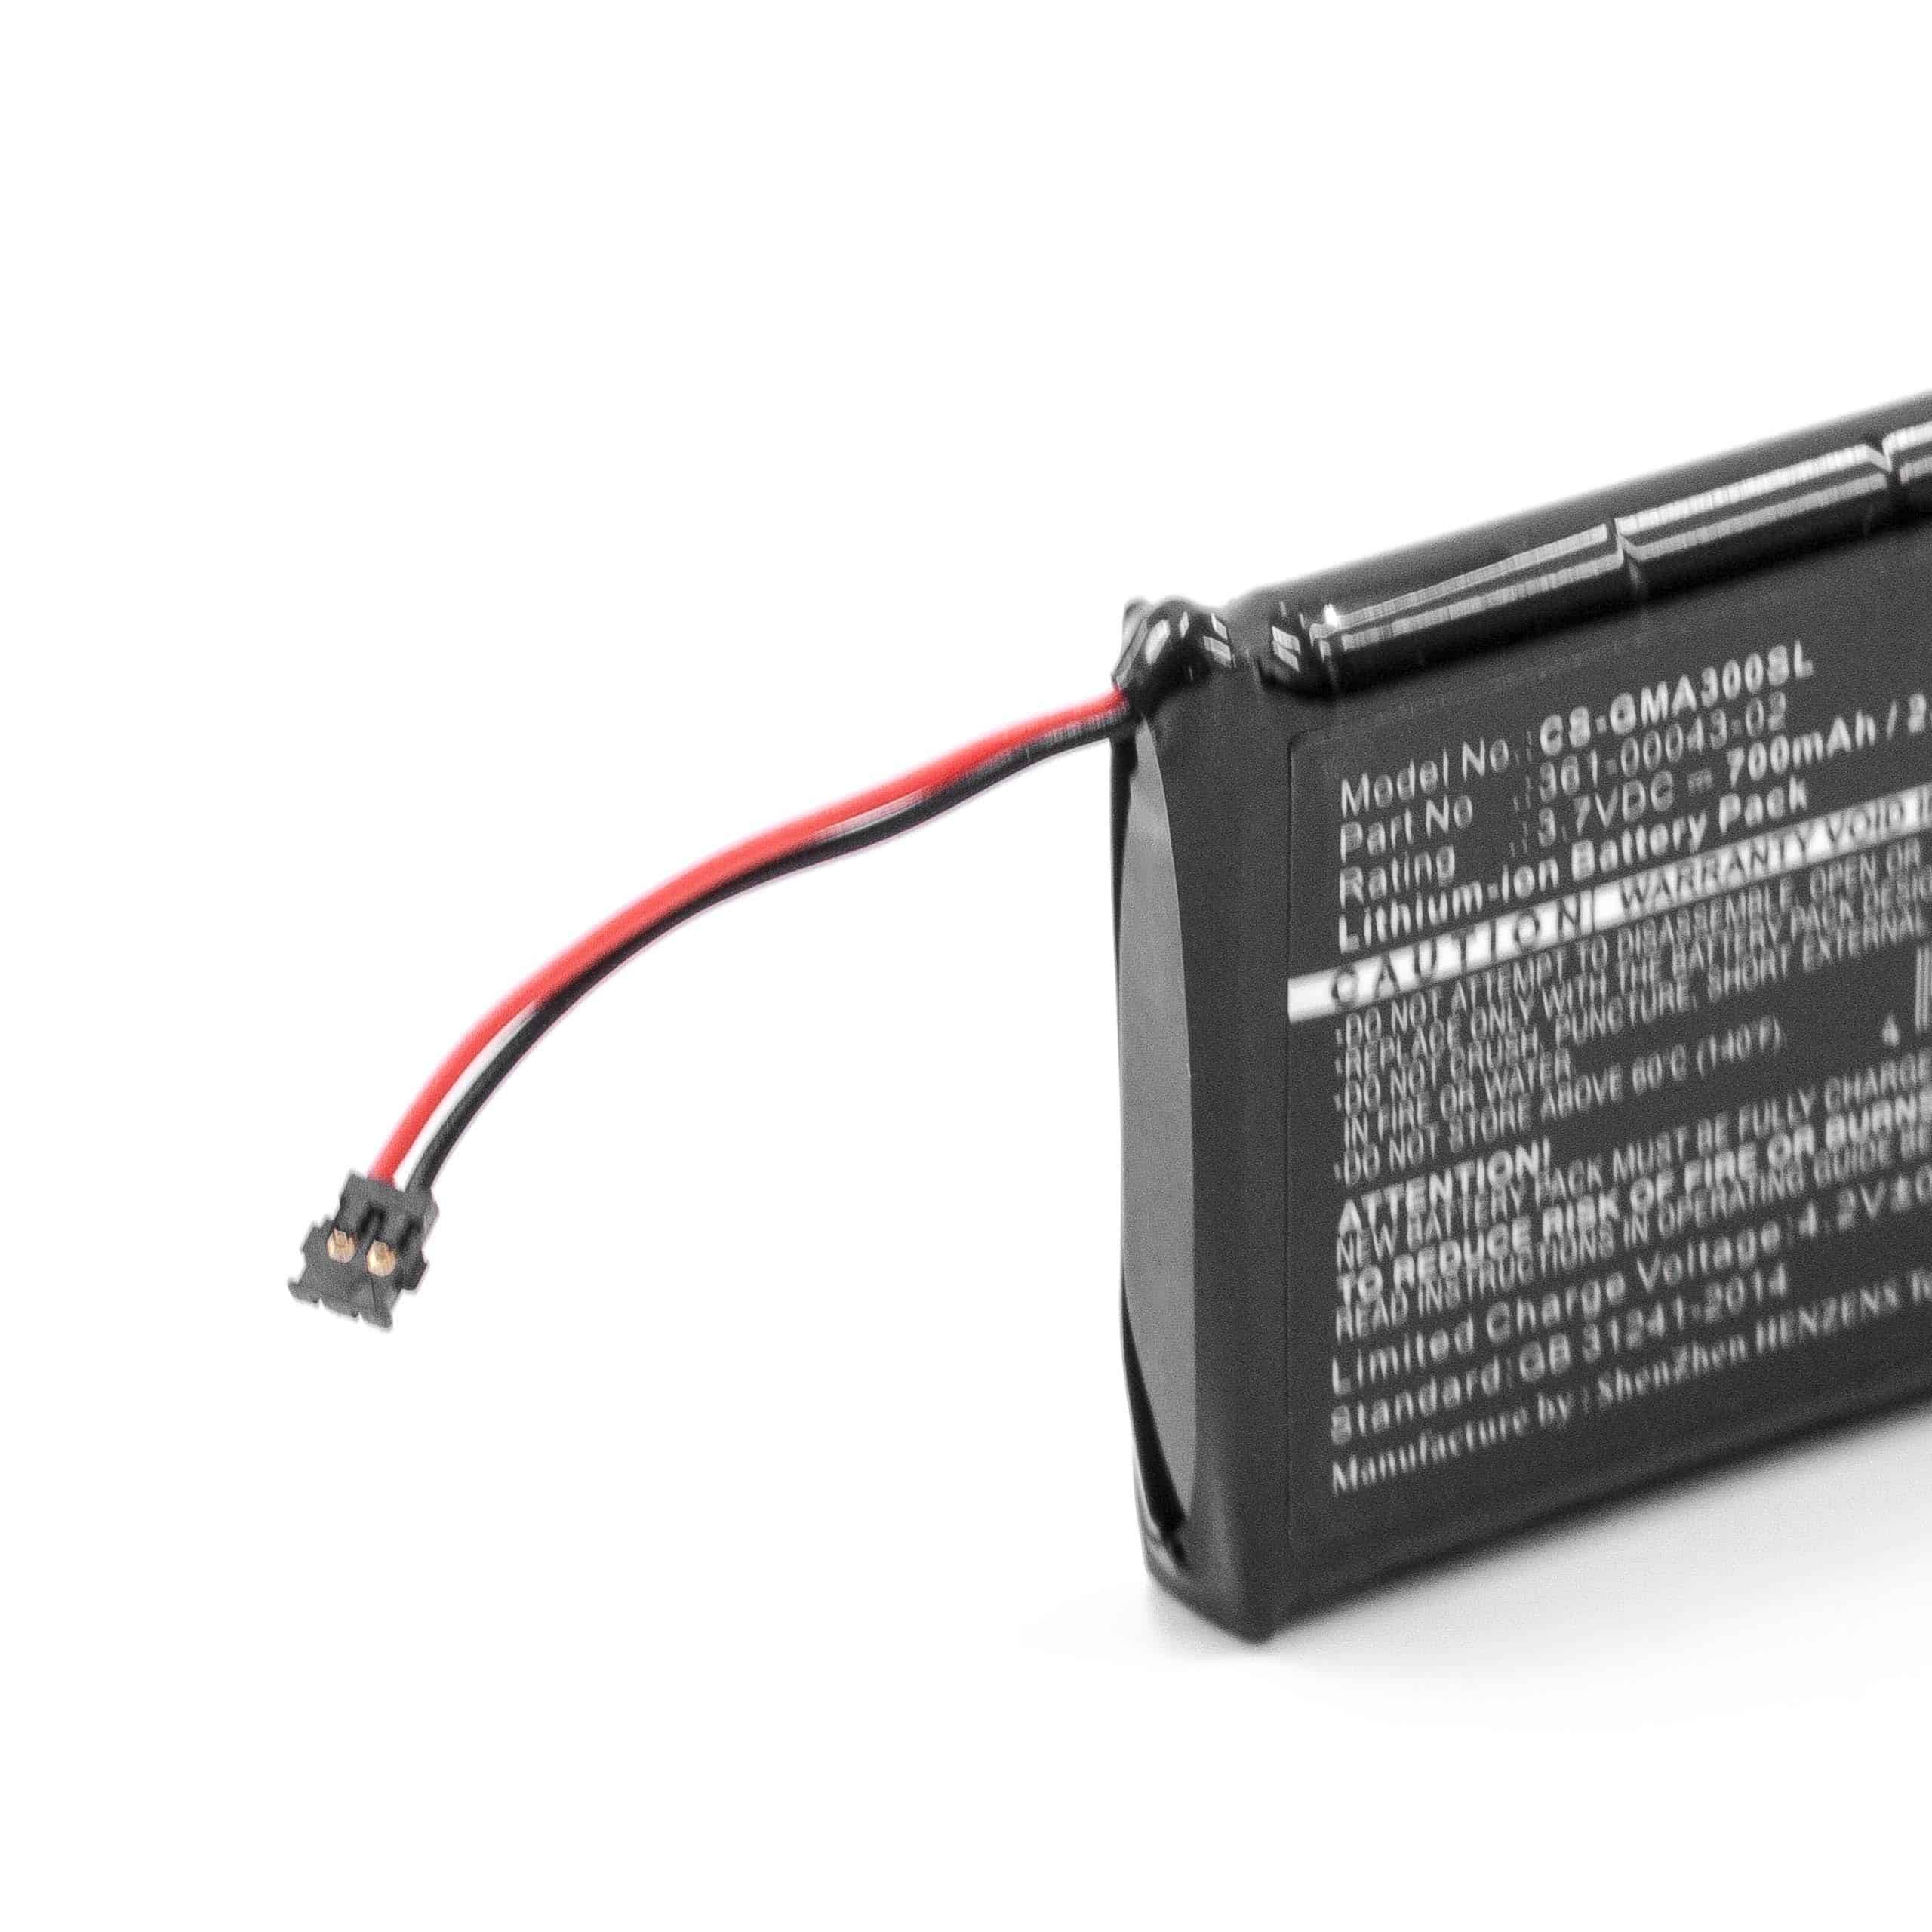 Batería reemplaza Garmin 361-00043-02 para GPS para golf Garmin - 700 mAh 3,7 V Li-Ion